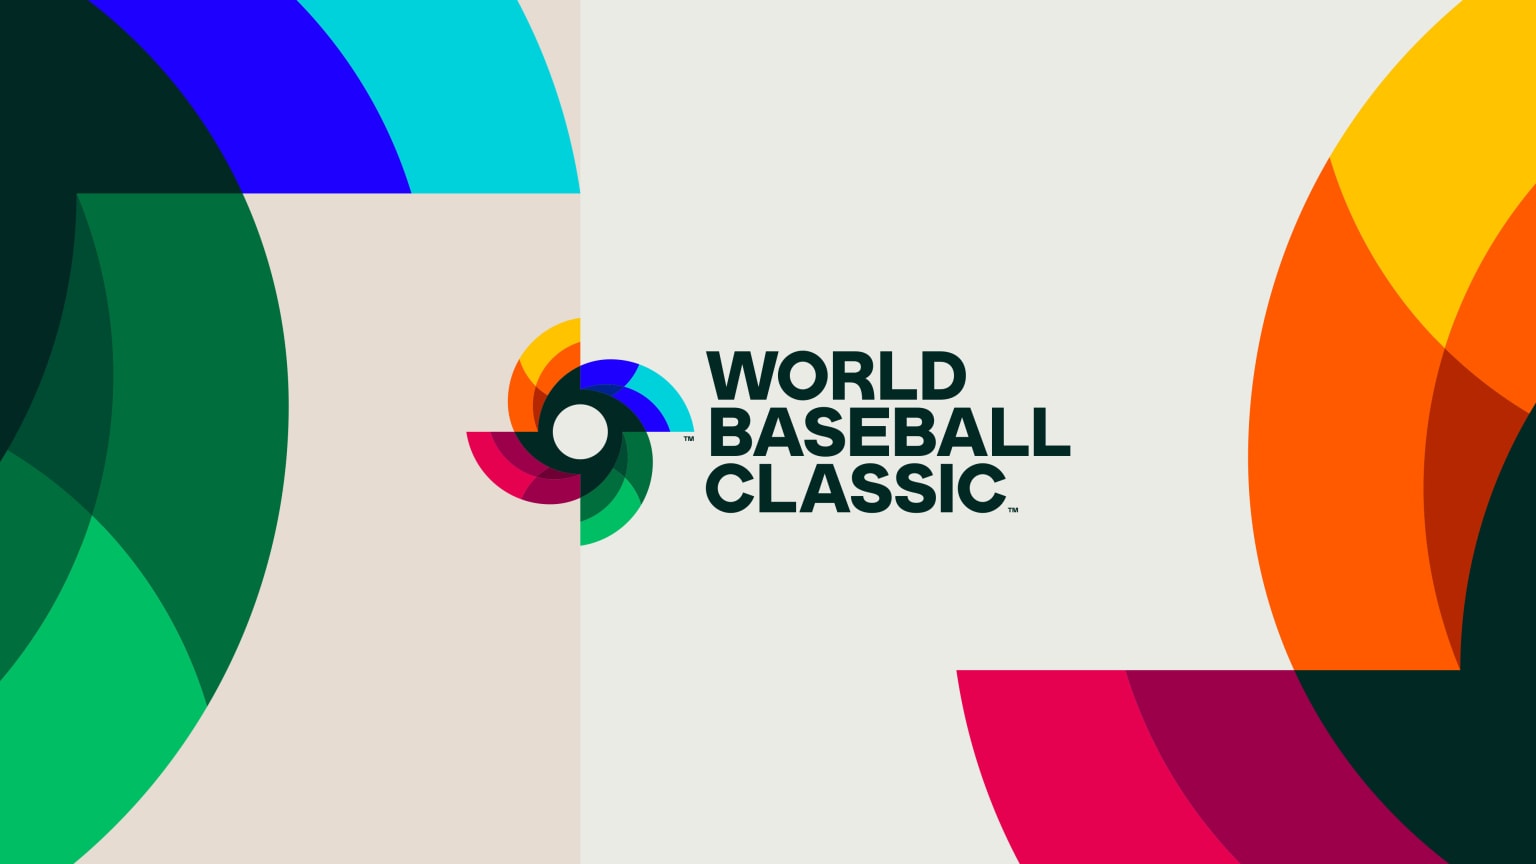 Team USA outlasts Venezuela in World Baseball Classic